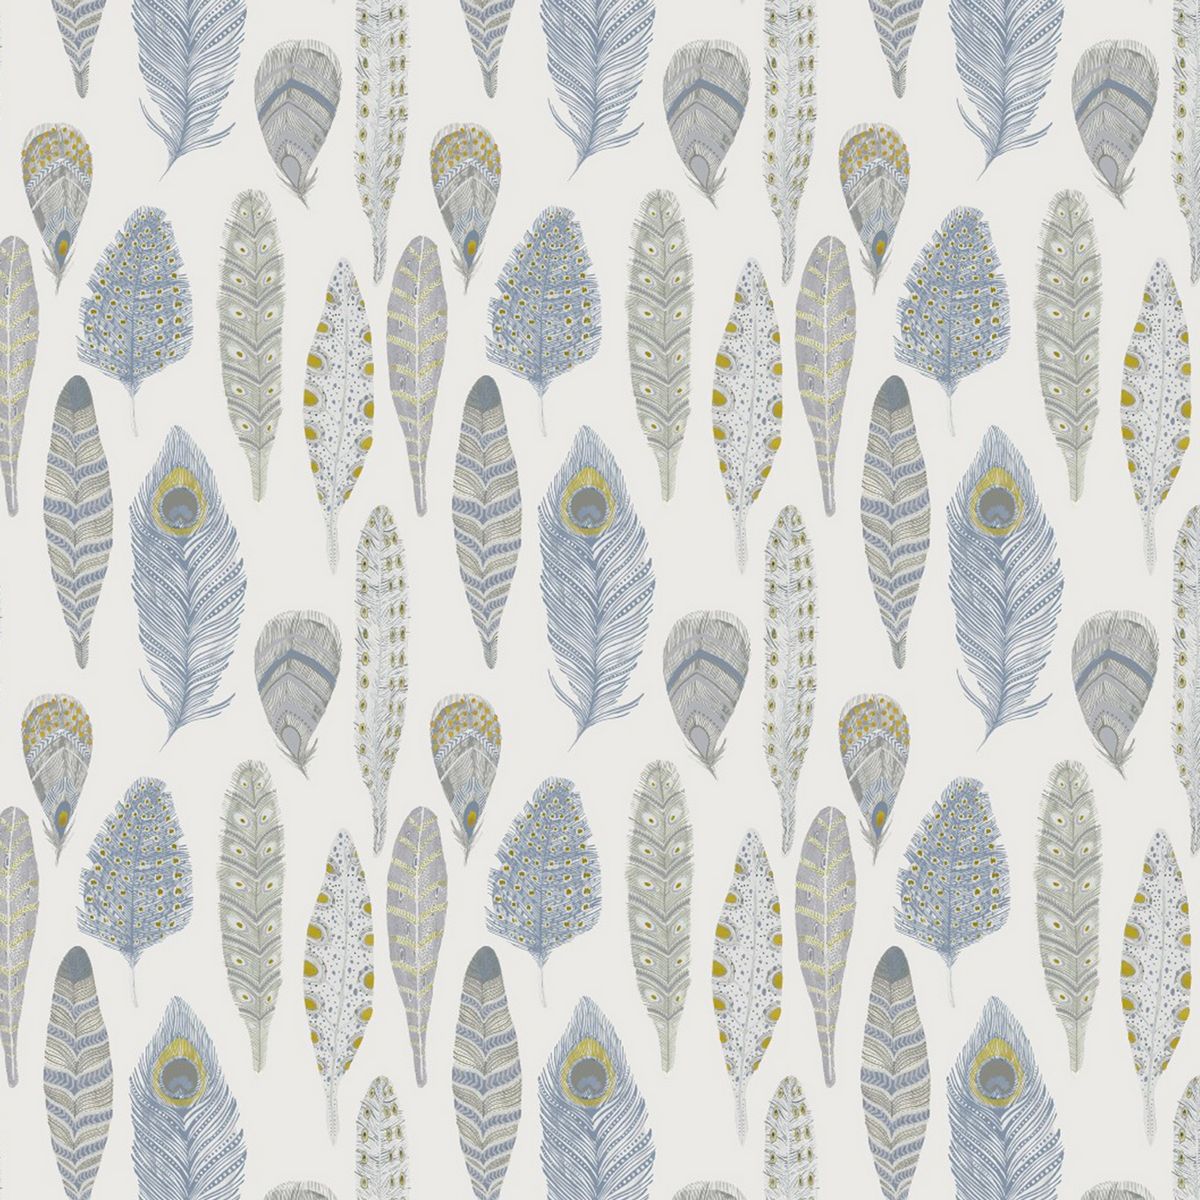 Samui Print Bluebell Fabric by Voyage Maison